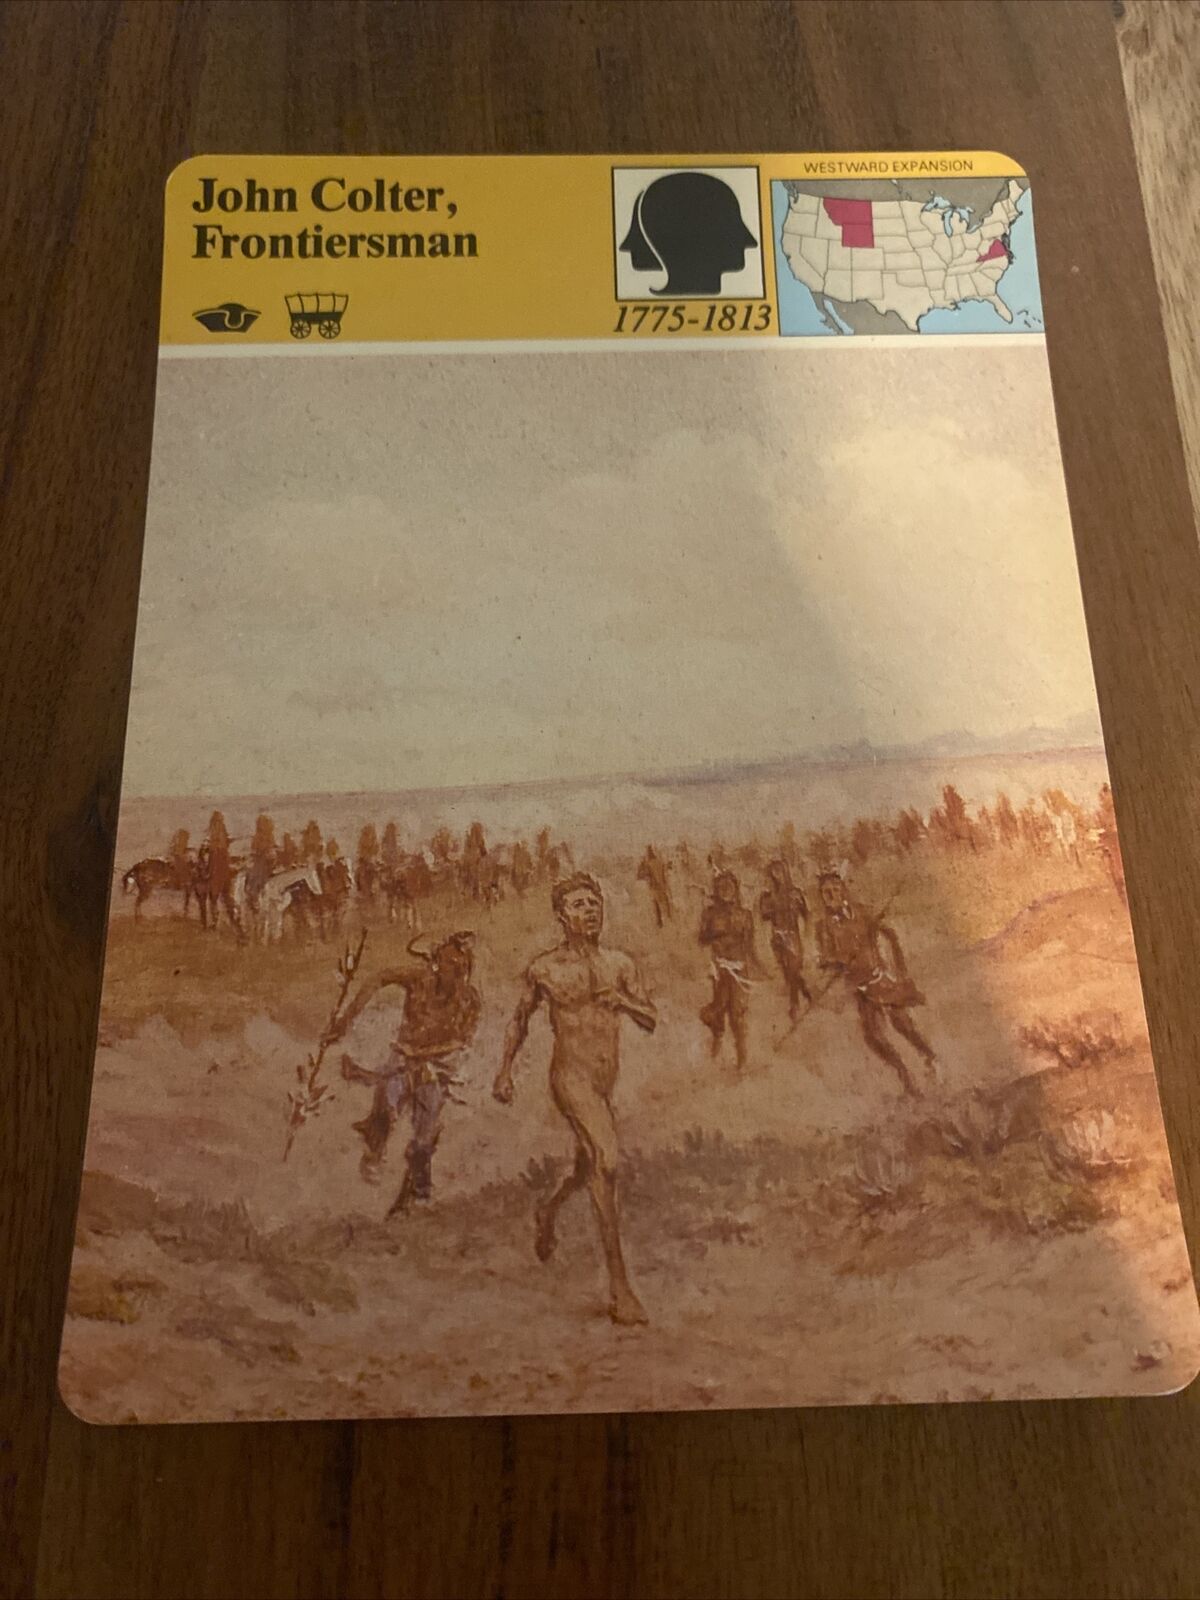 1981 panarizon john colter frontiersman card unlaminated